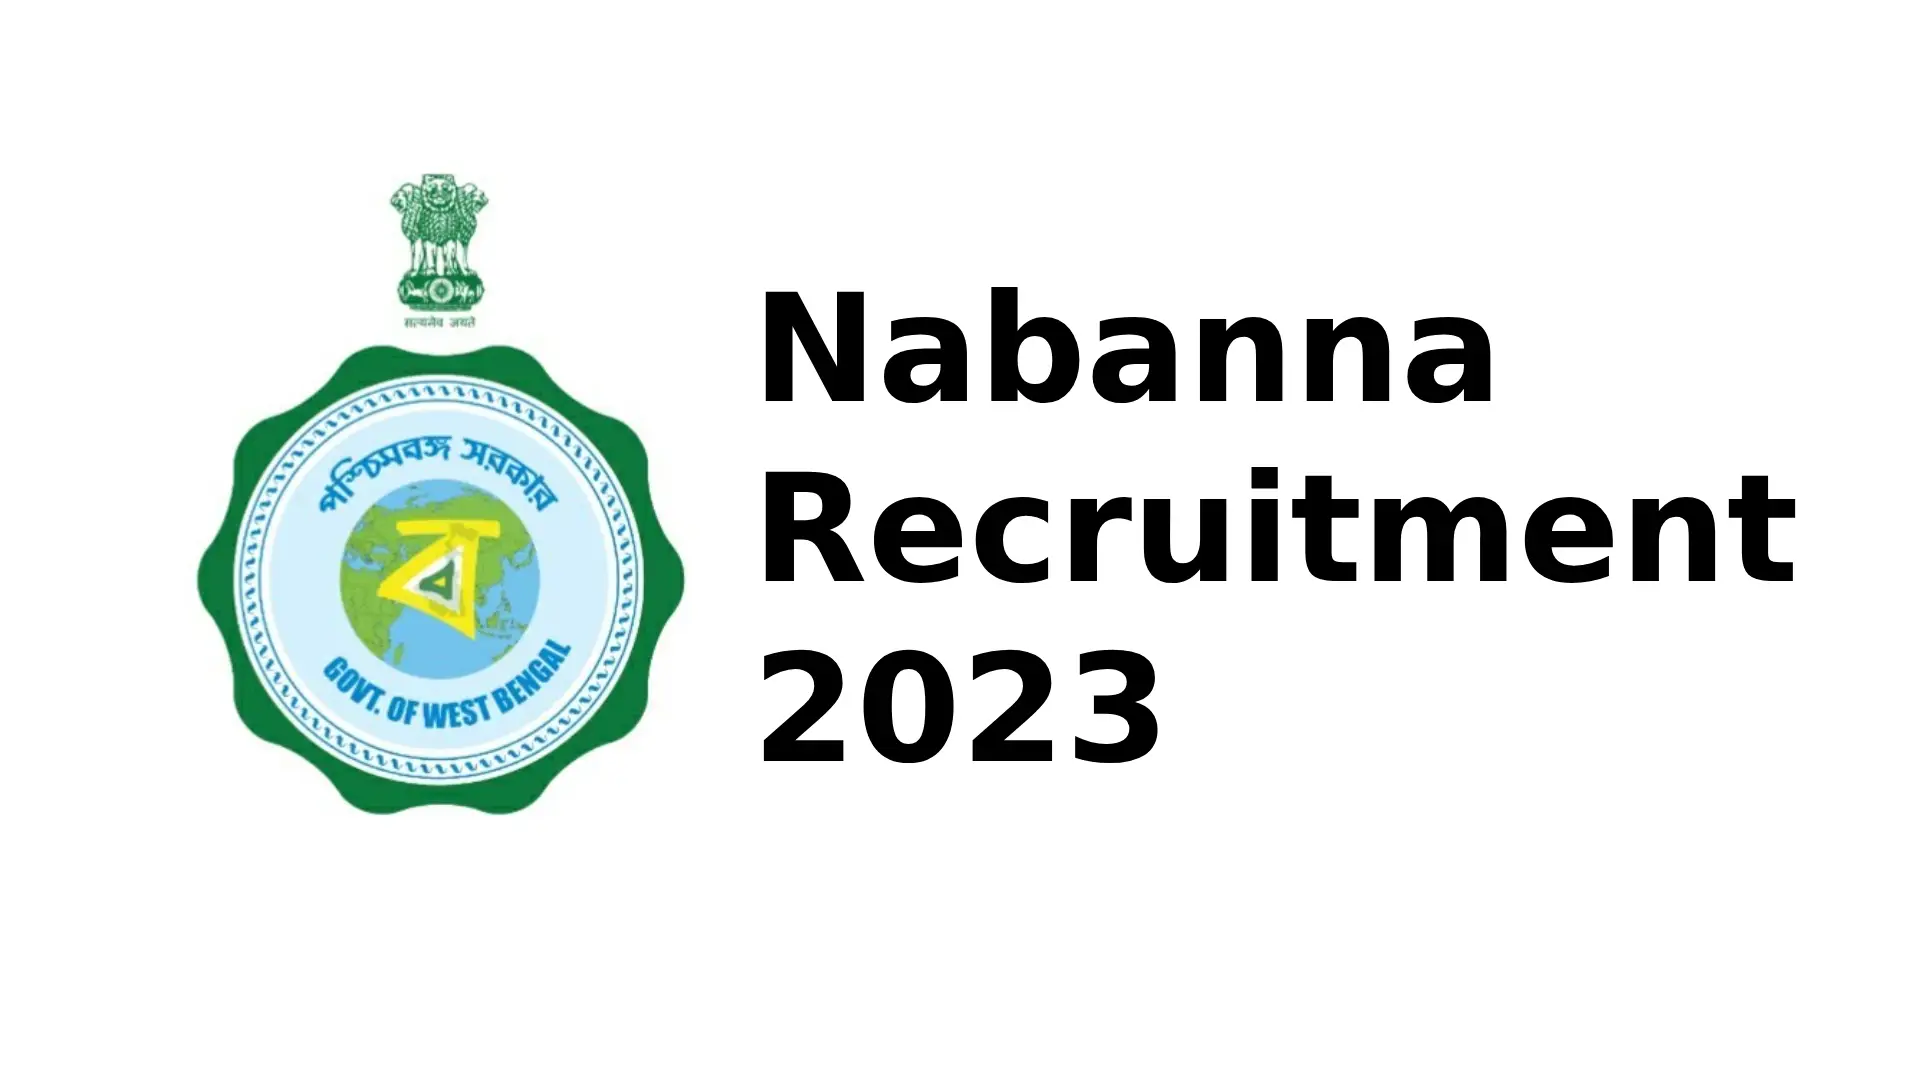 Nabanna Recruitment 2023